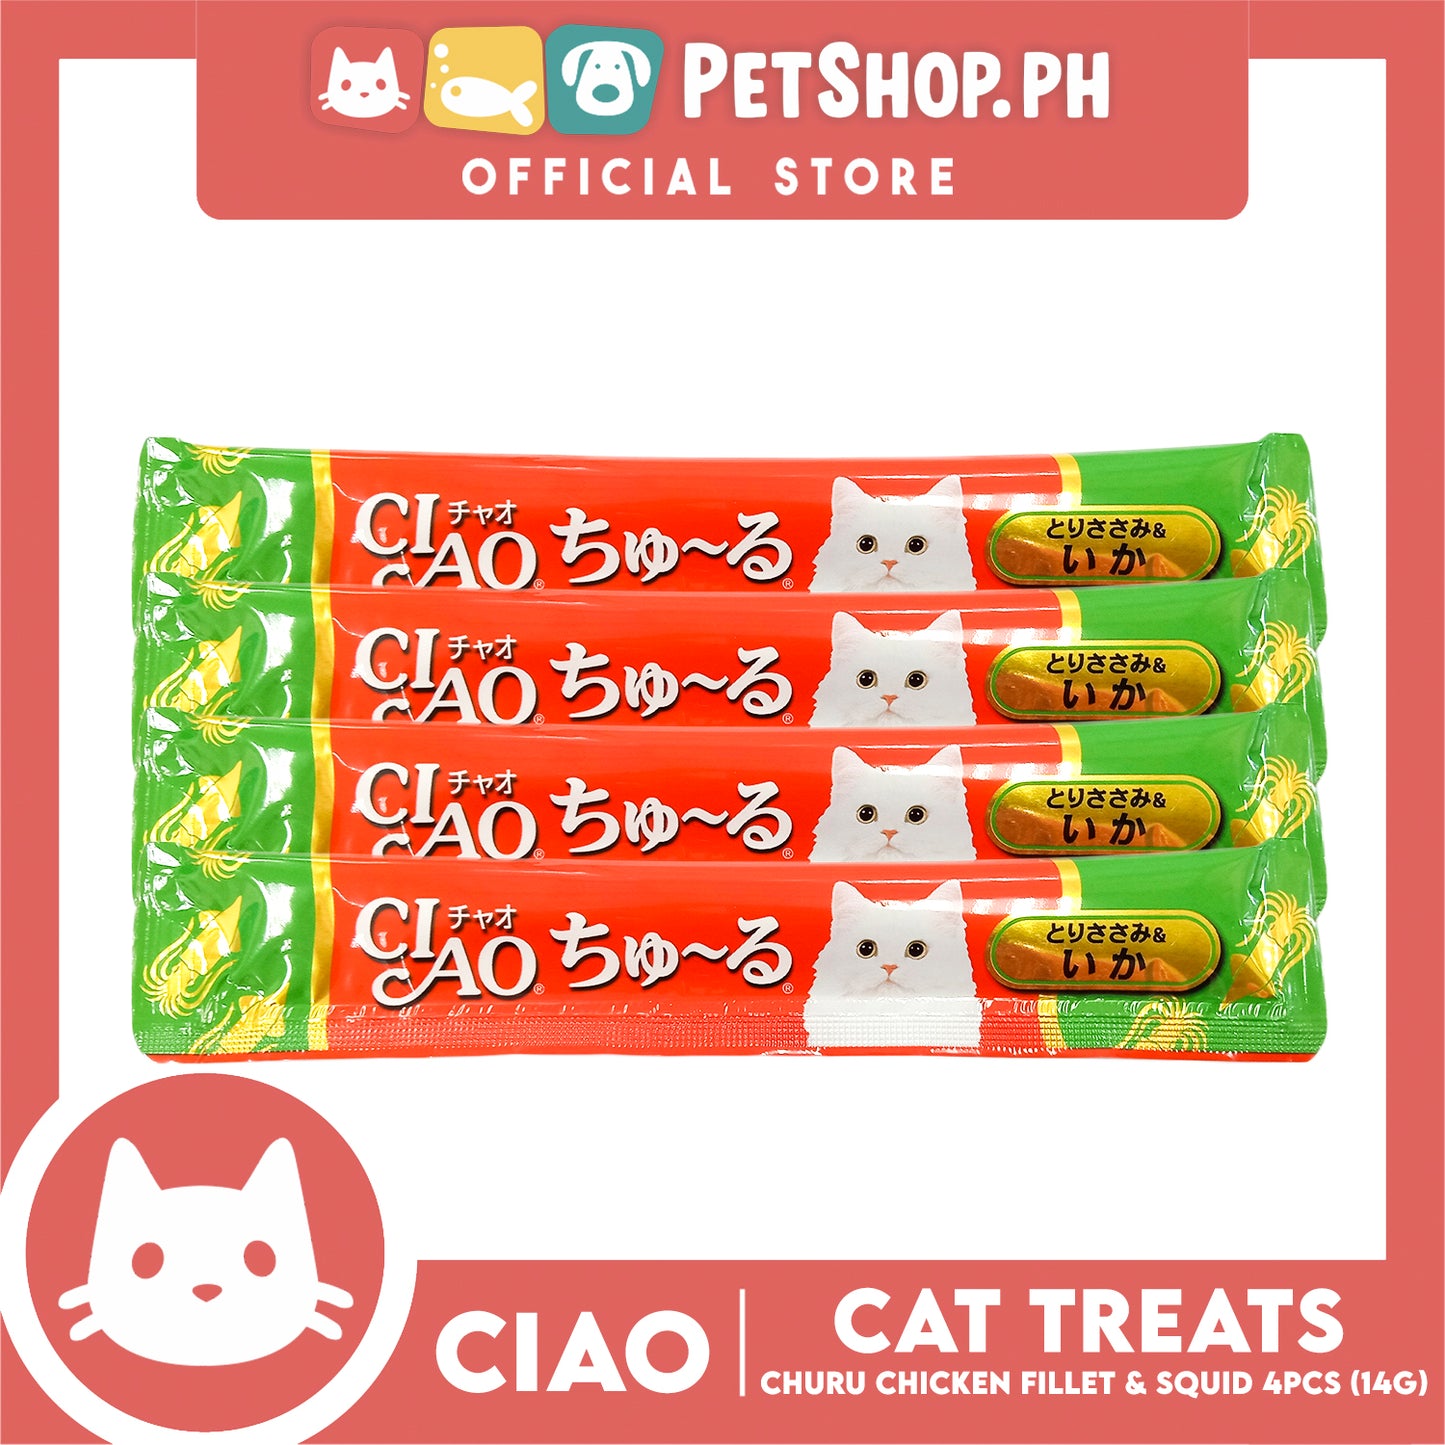 Ciao Churu Chicken Fillet And Squid Flavor (SC-79) Creamy Cat Treats 14g x 4pcs